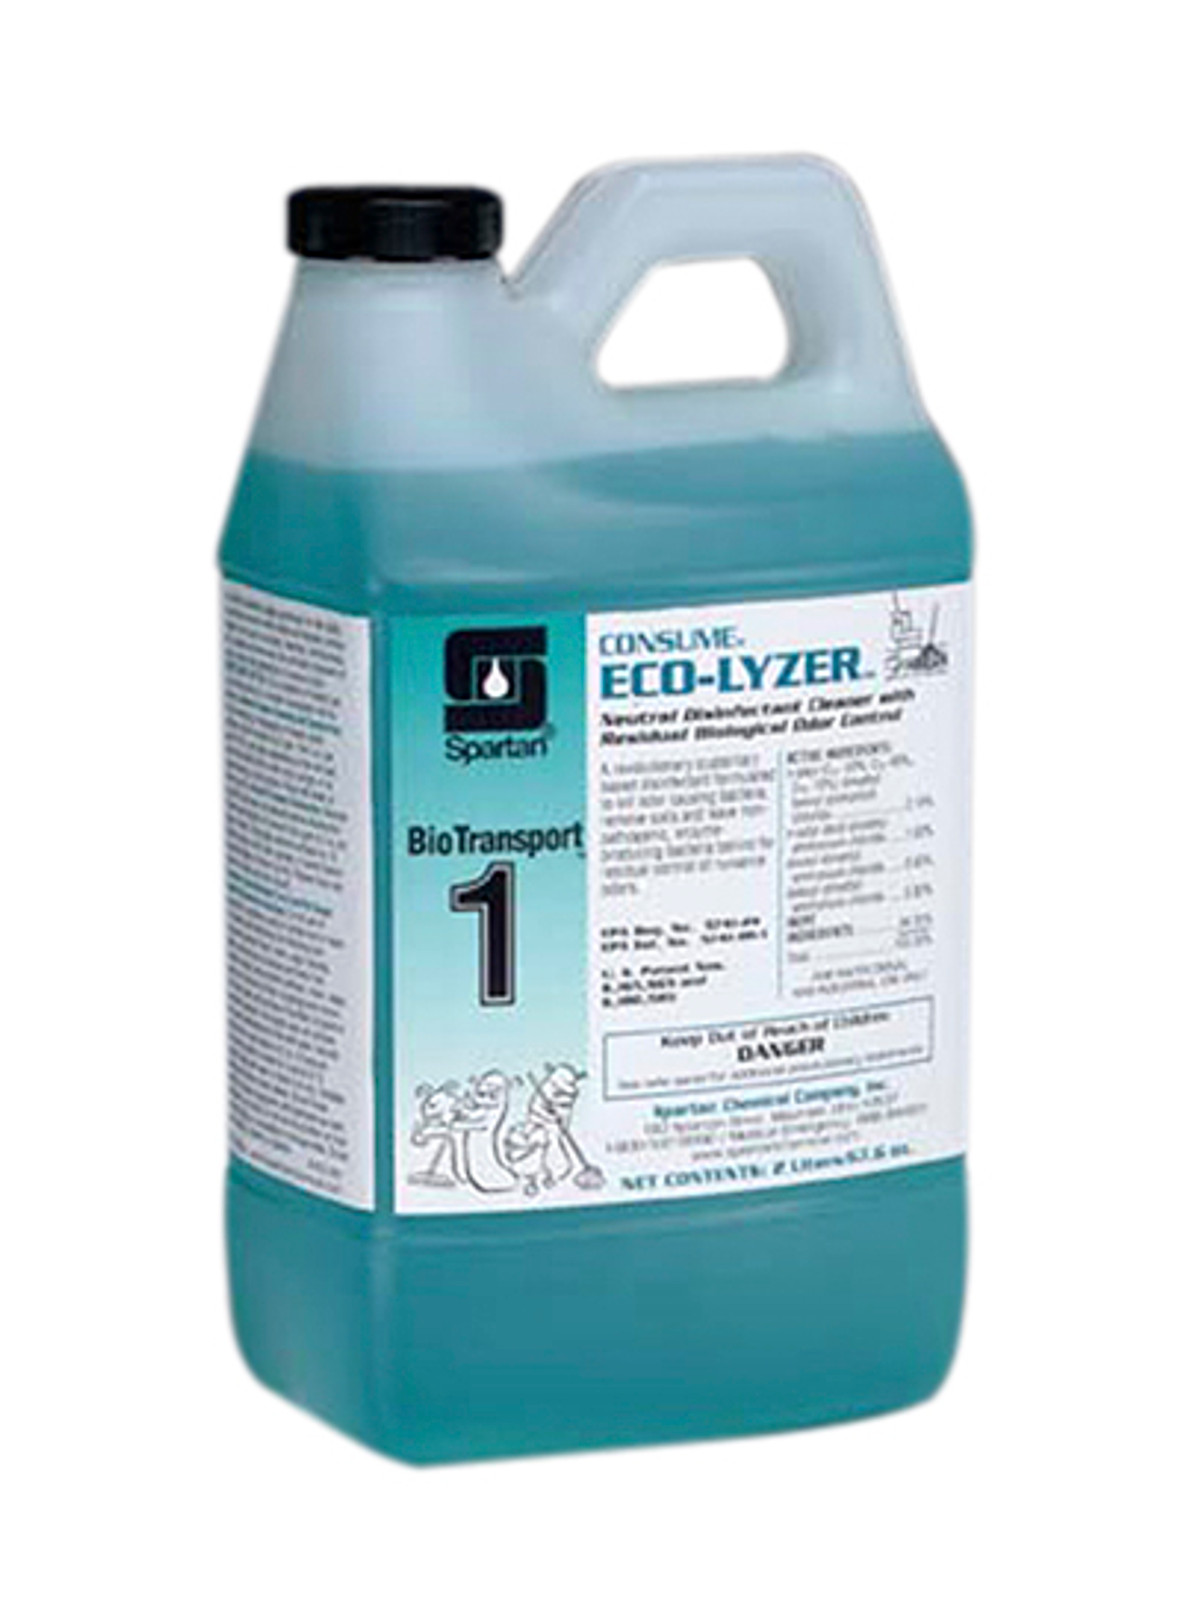 Spartan BioTransport 1 Consume Eco-Lyzer  Floral Scent Disinfectant/Deodorant, 2 Liter s, 4 Per Case (Not Available in California)